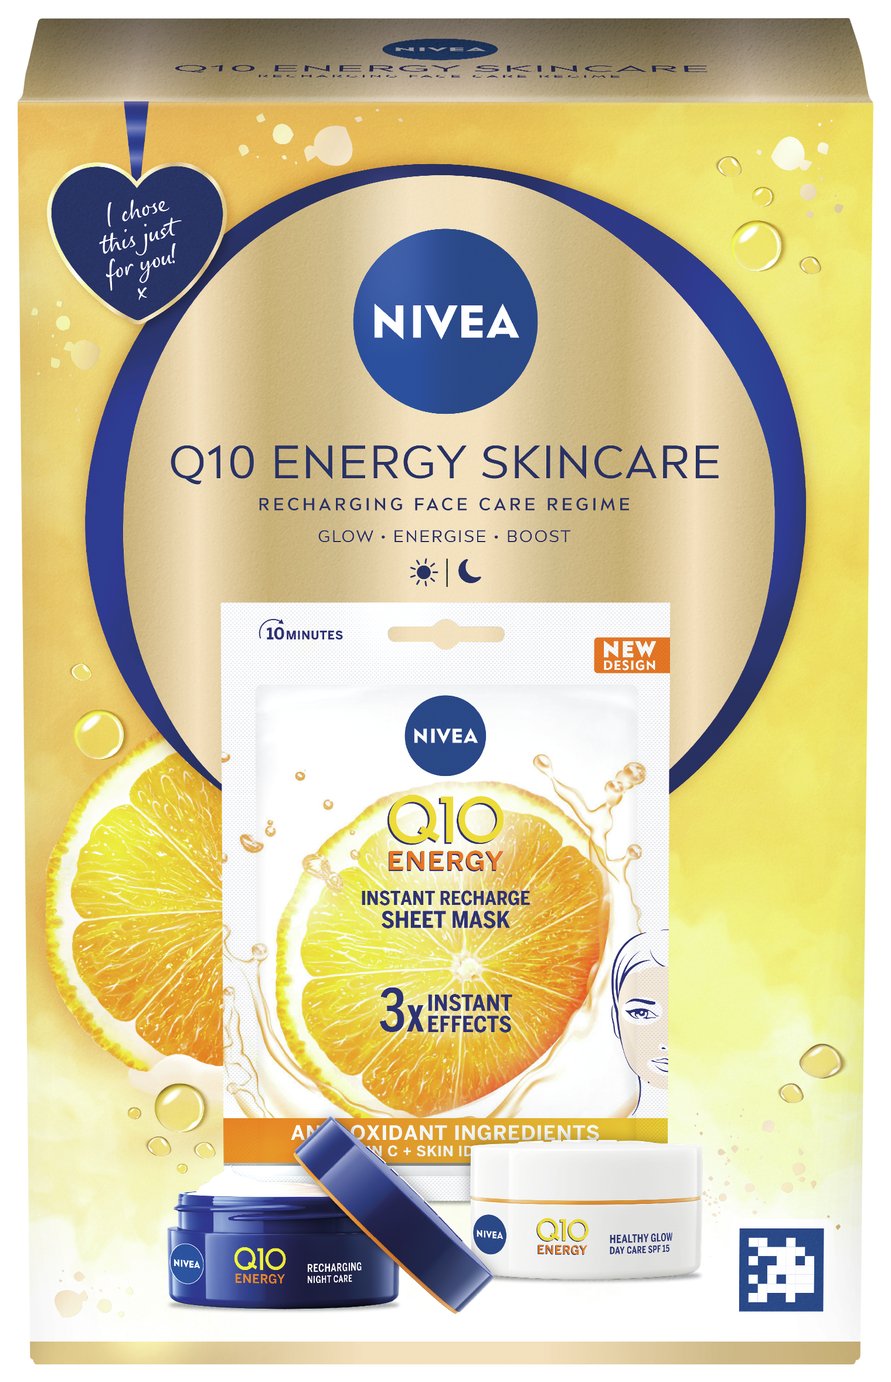 Nivea Q10 Energy Skincare Gift Set